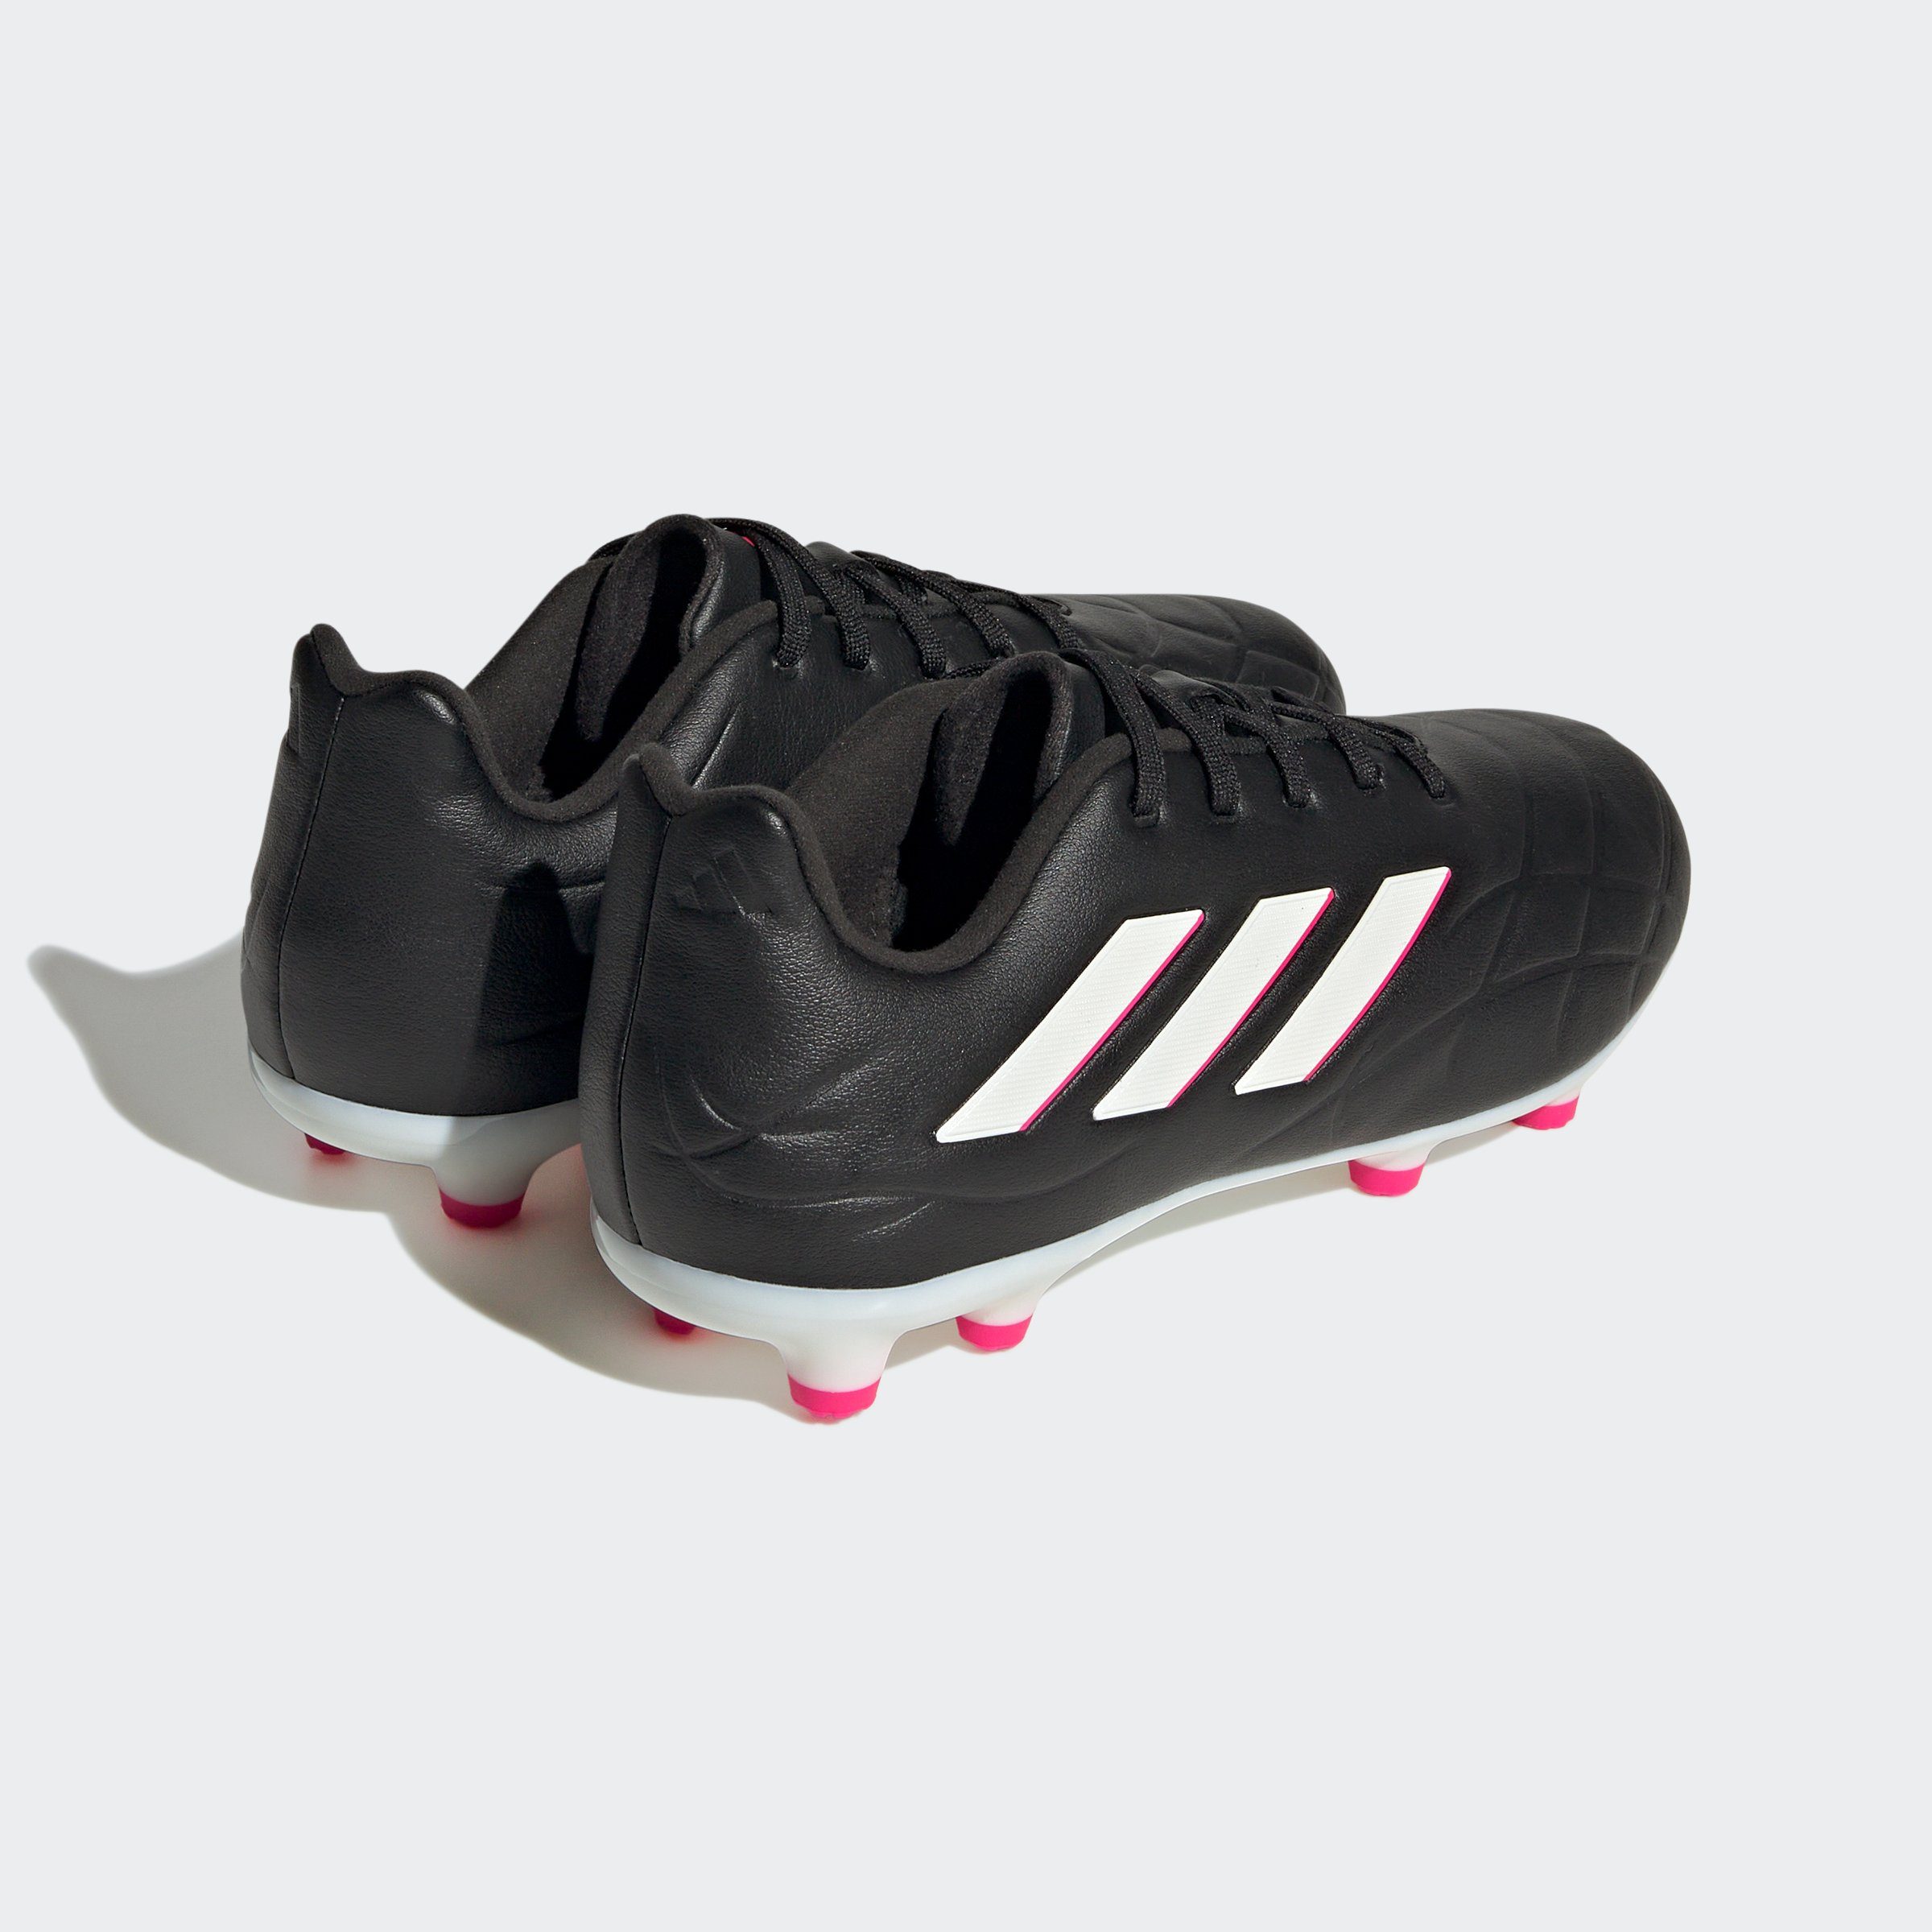 Pink Core adidas Performance Zero Team Metallic Black 2 PURE.3 COPA Shock FG Fußballschuh / /